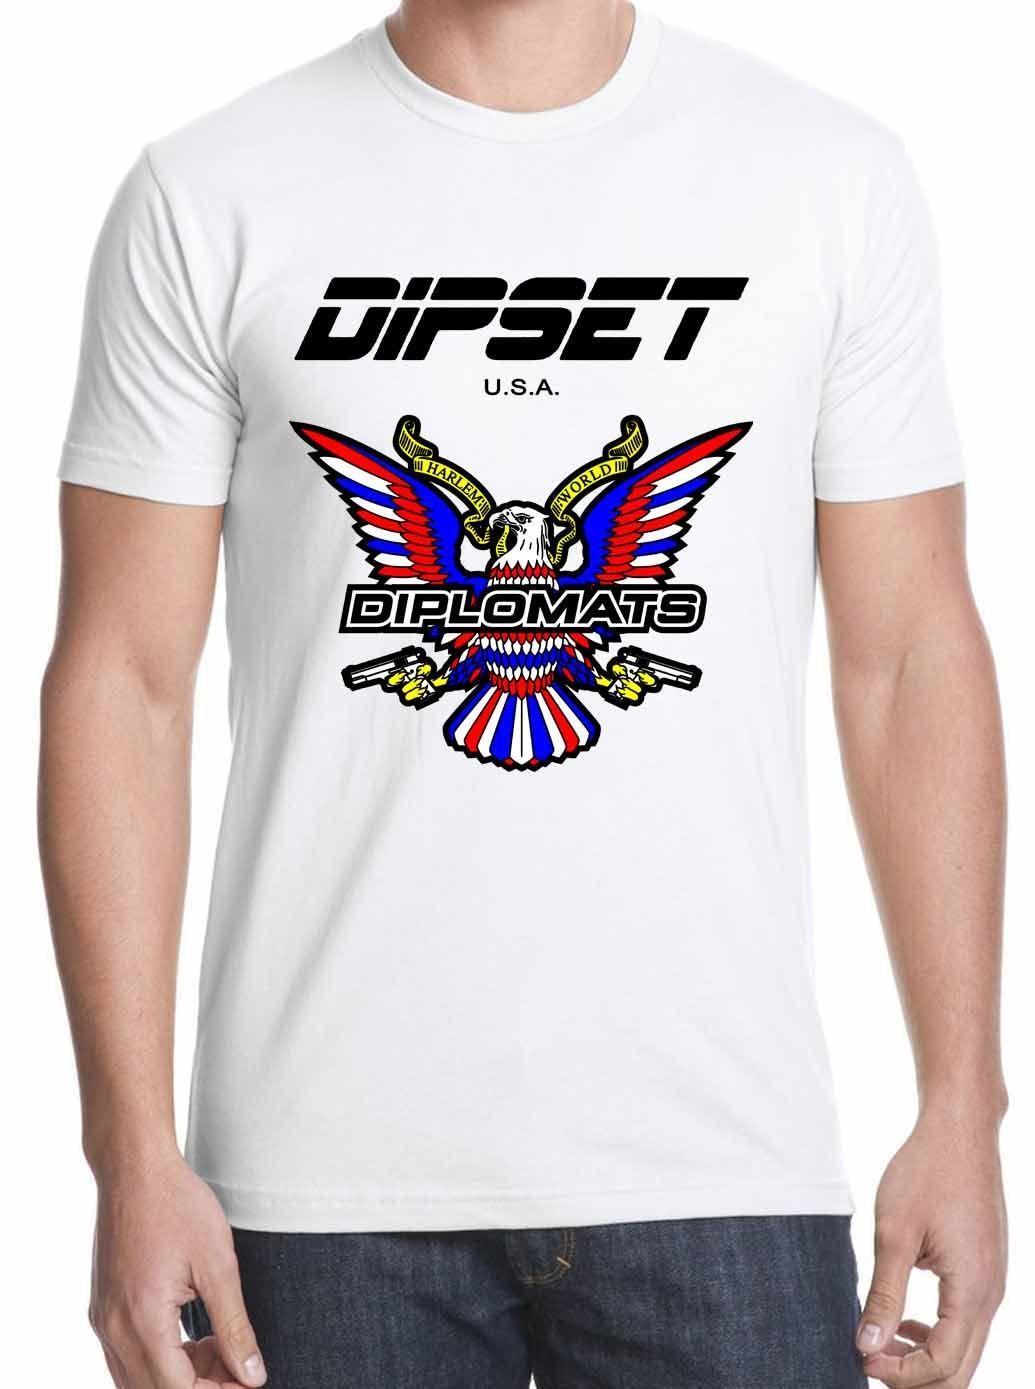 Dipset Logo - NEW the diplomats logo dipset t-shirt SIZE S - 2XL free shipping Mens 2018  fashion